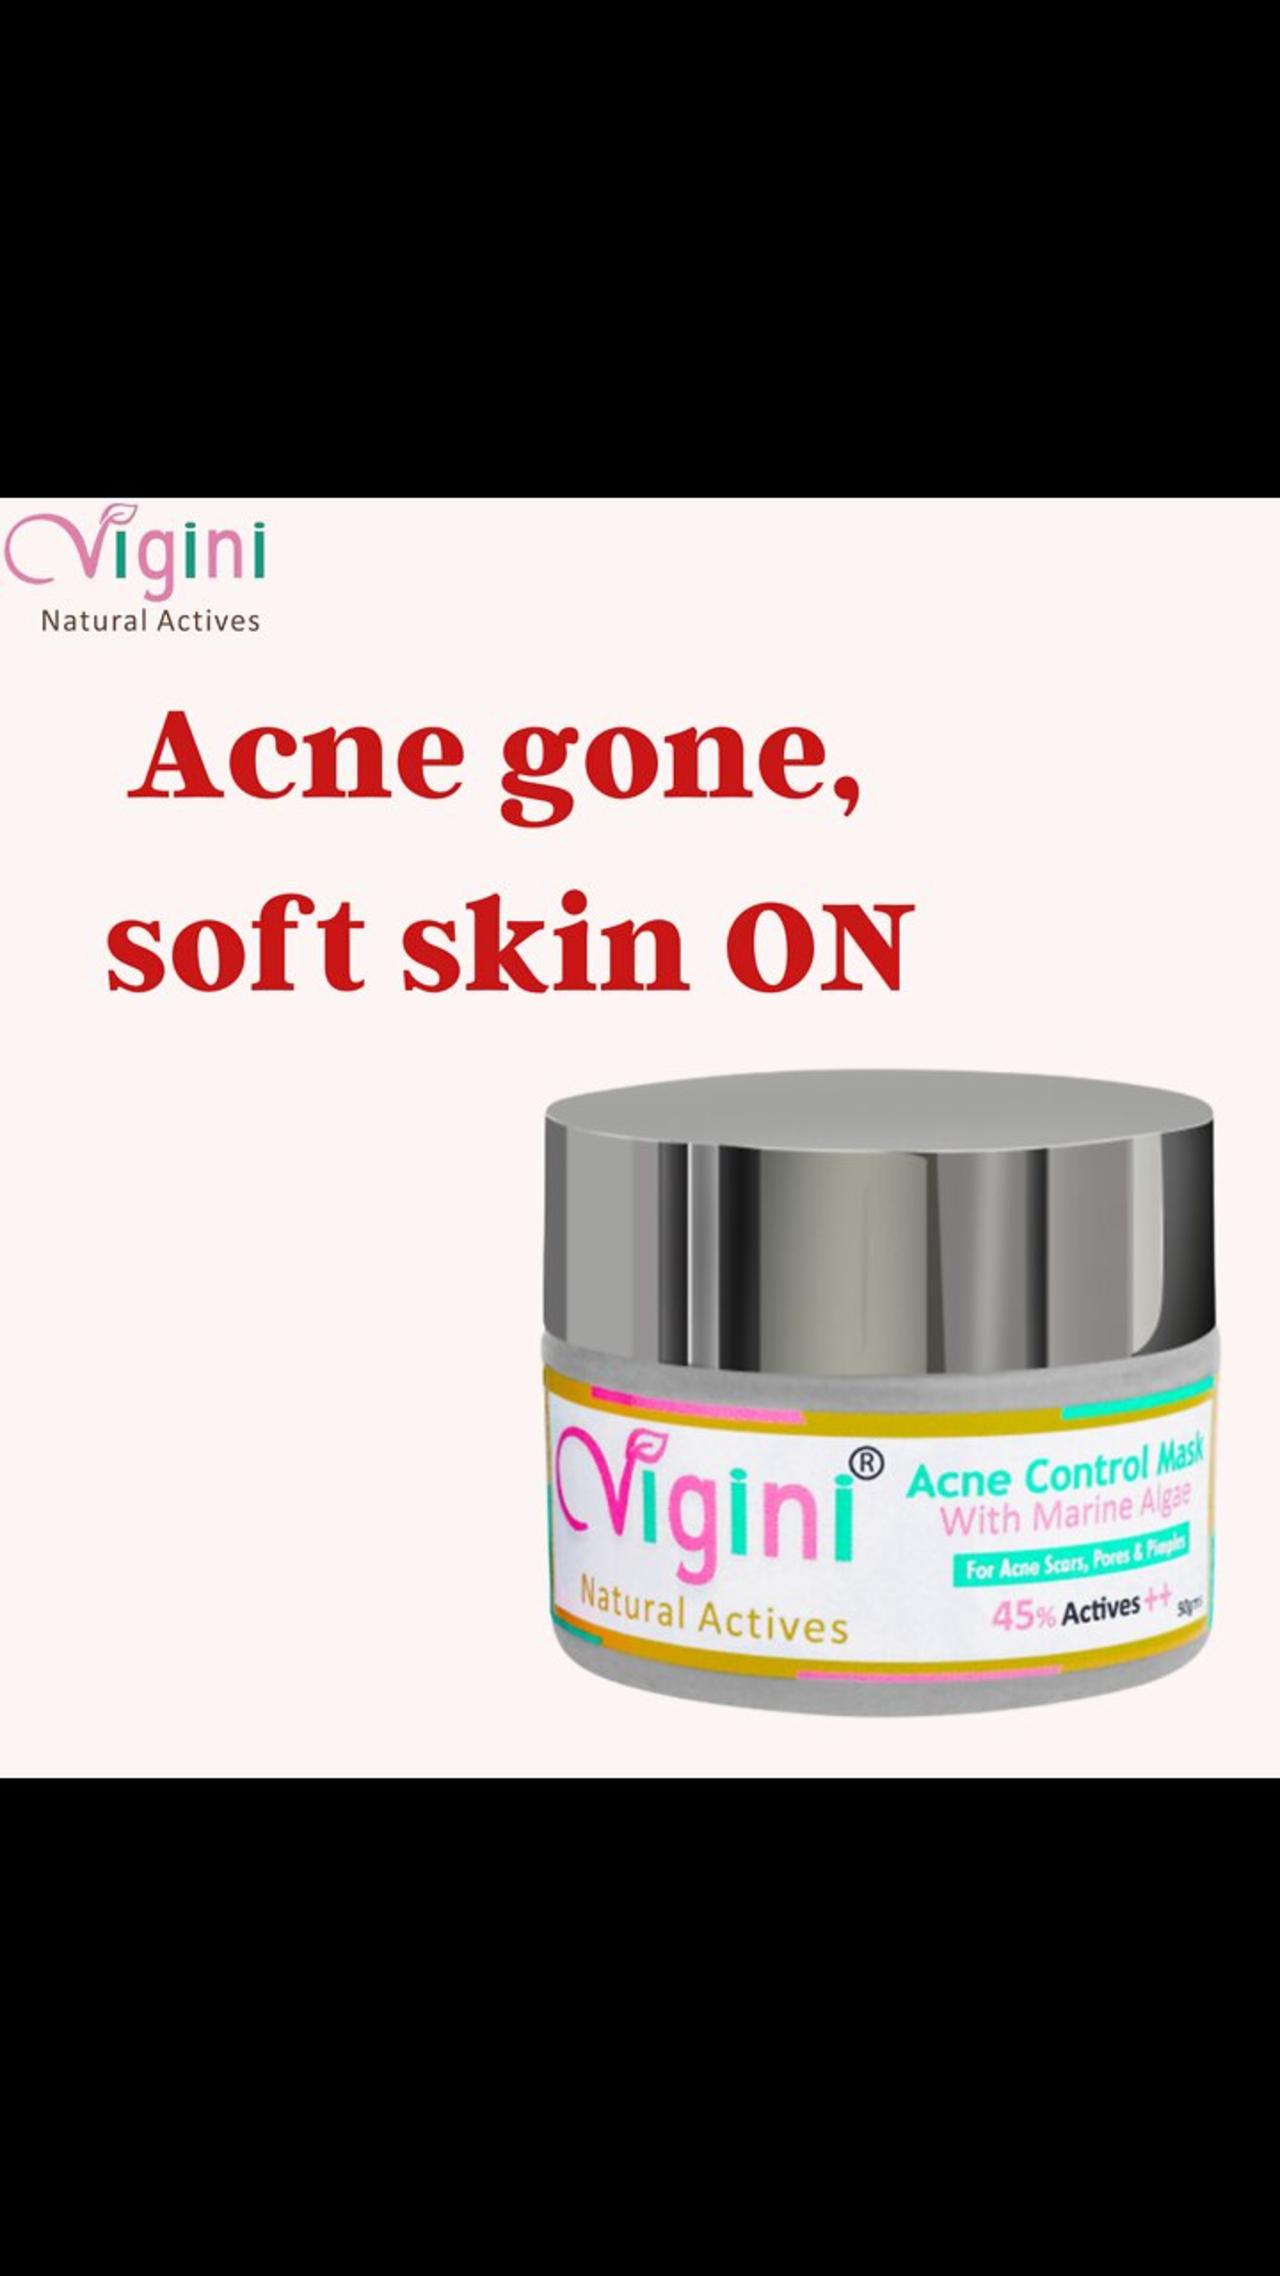 Marine Algae for Acne free clear Skin